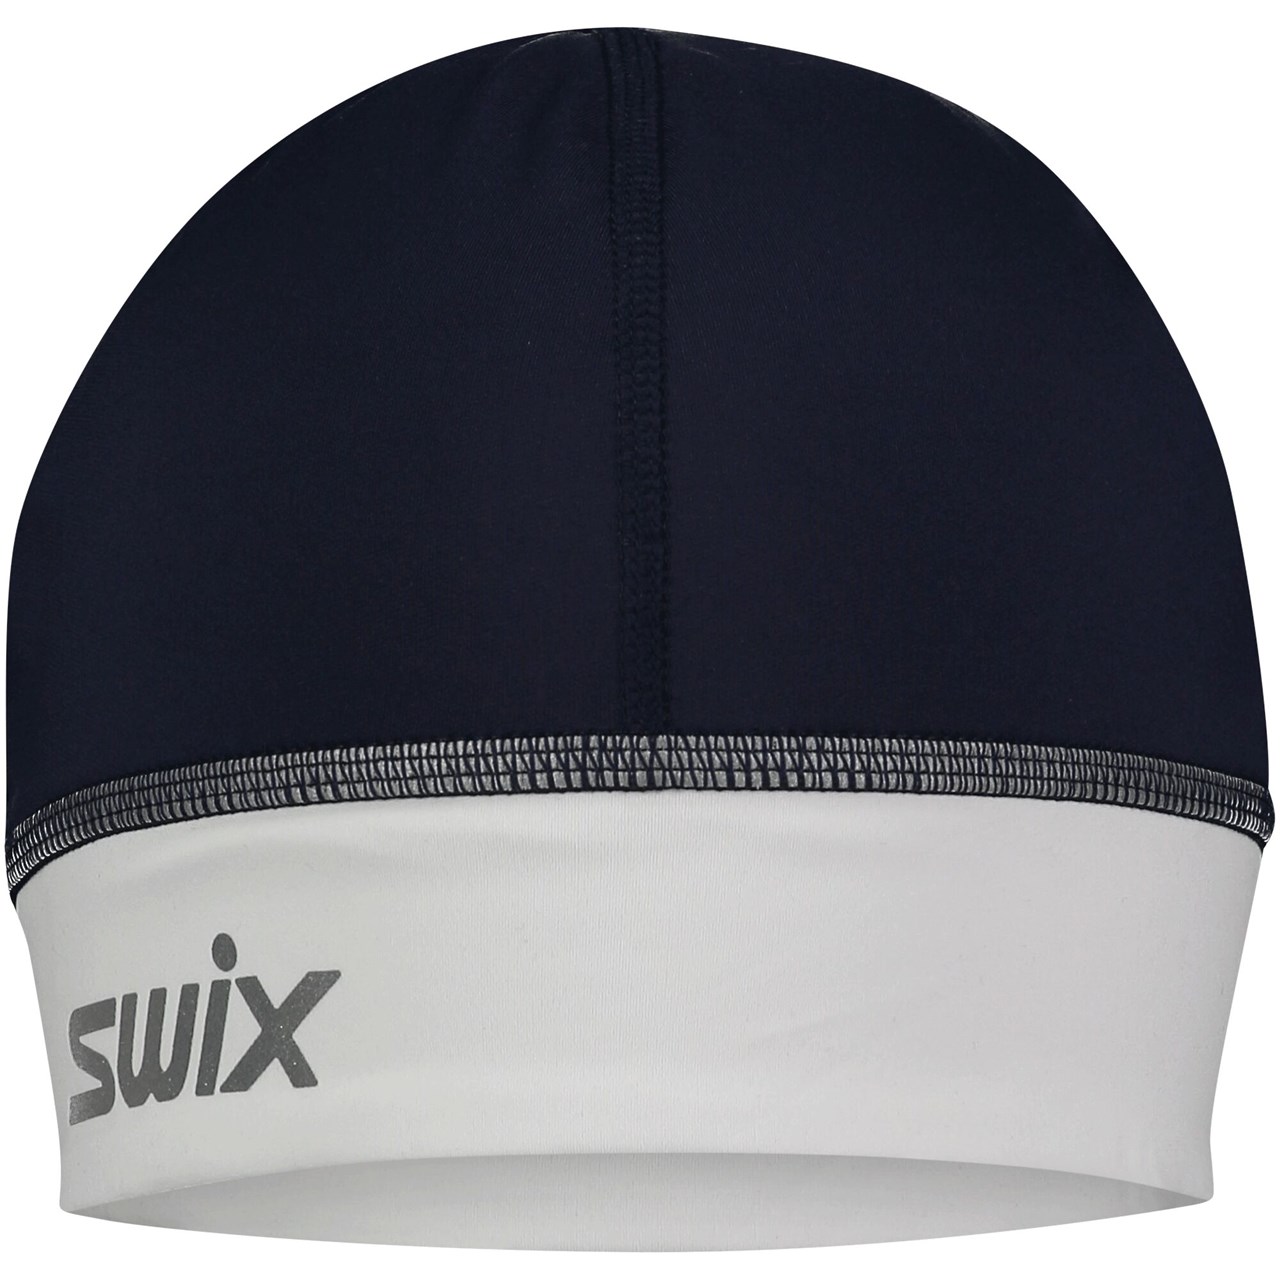 Swix Dynamic hat